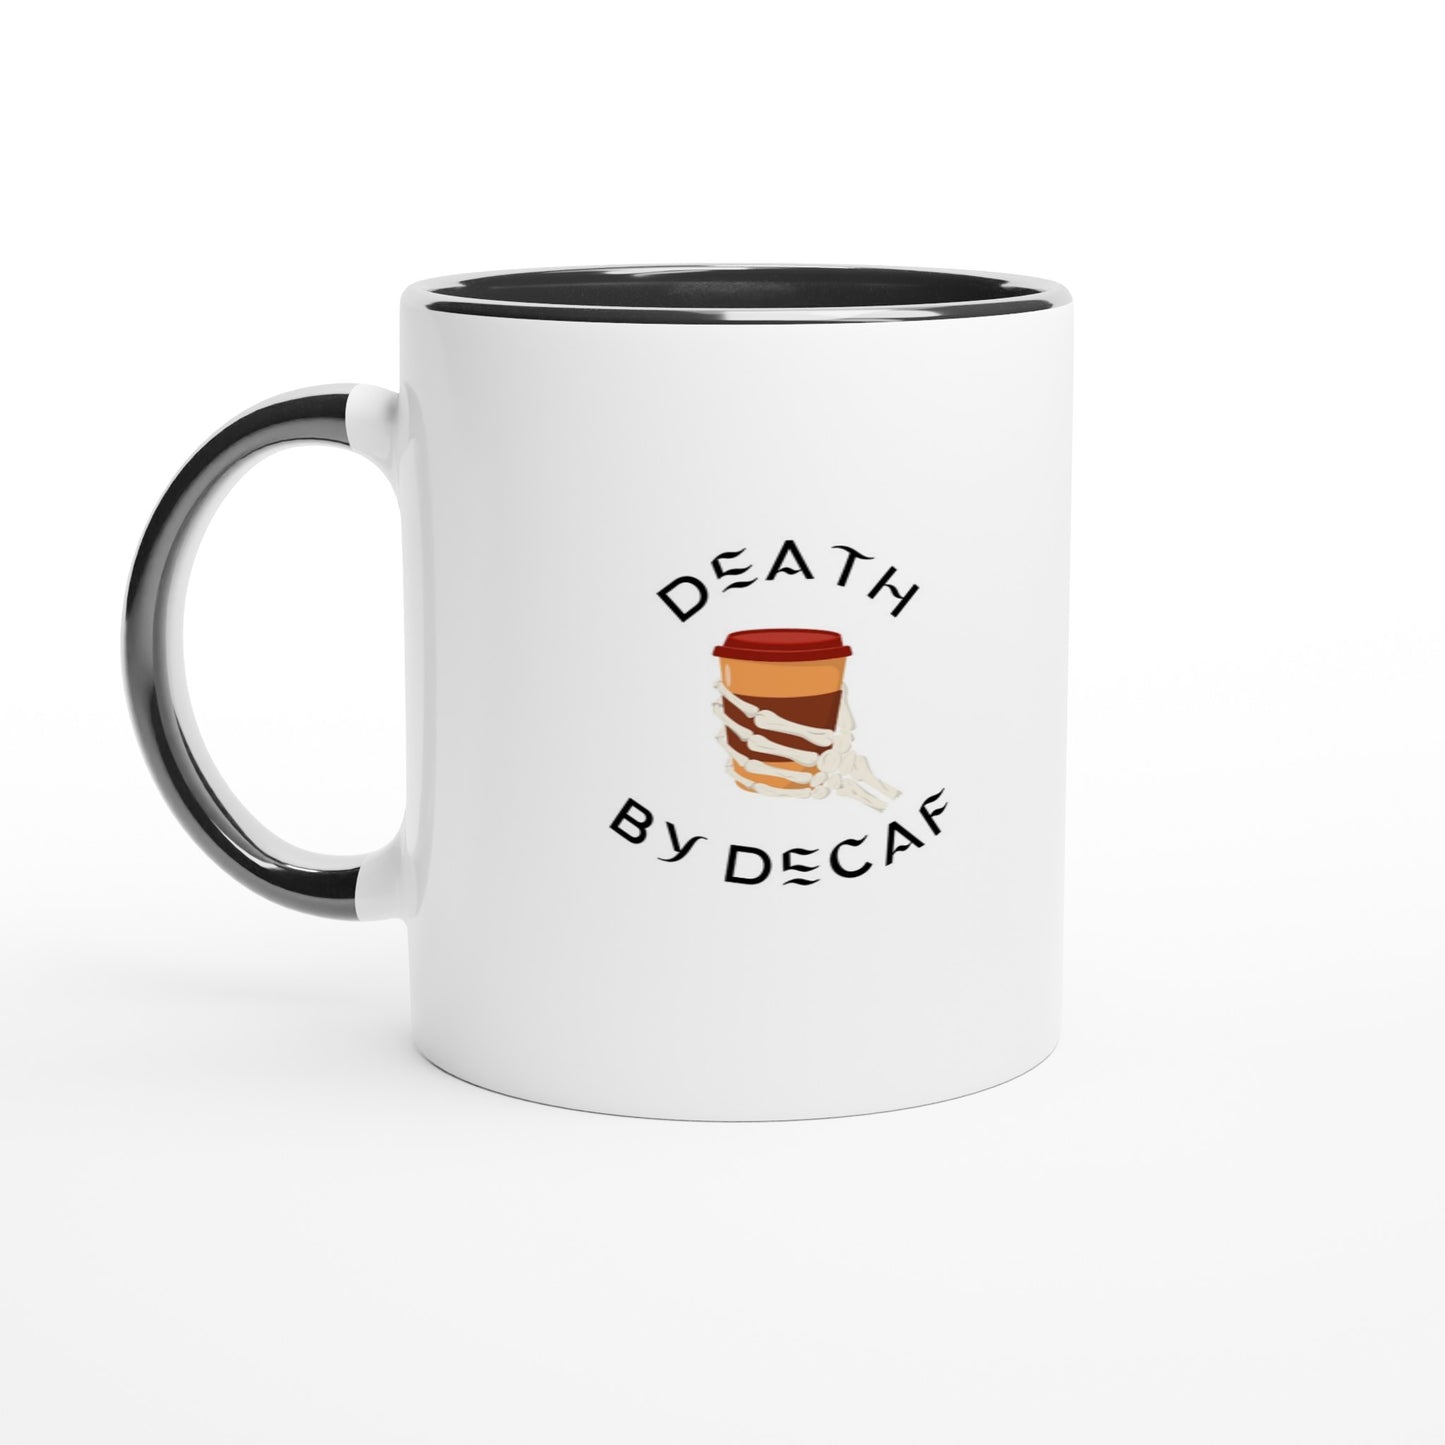 White 11oz Ceramic Mug with Colour Inside - Death By Decaf